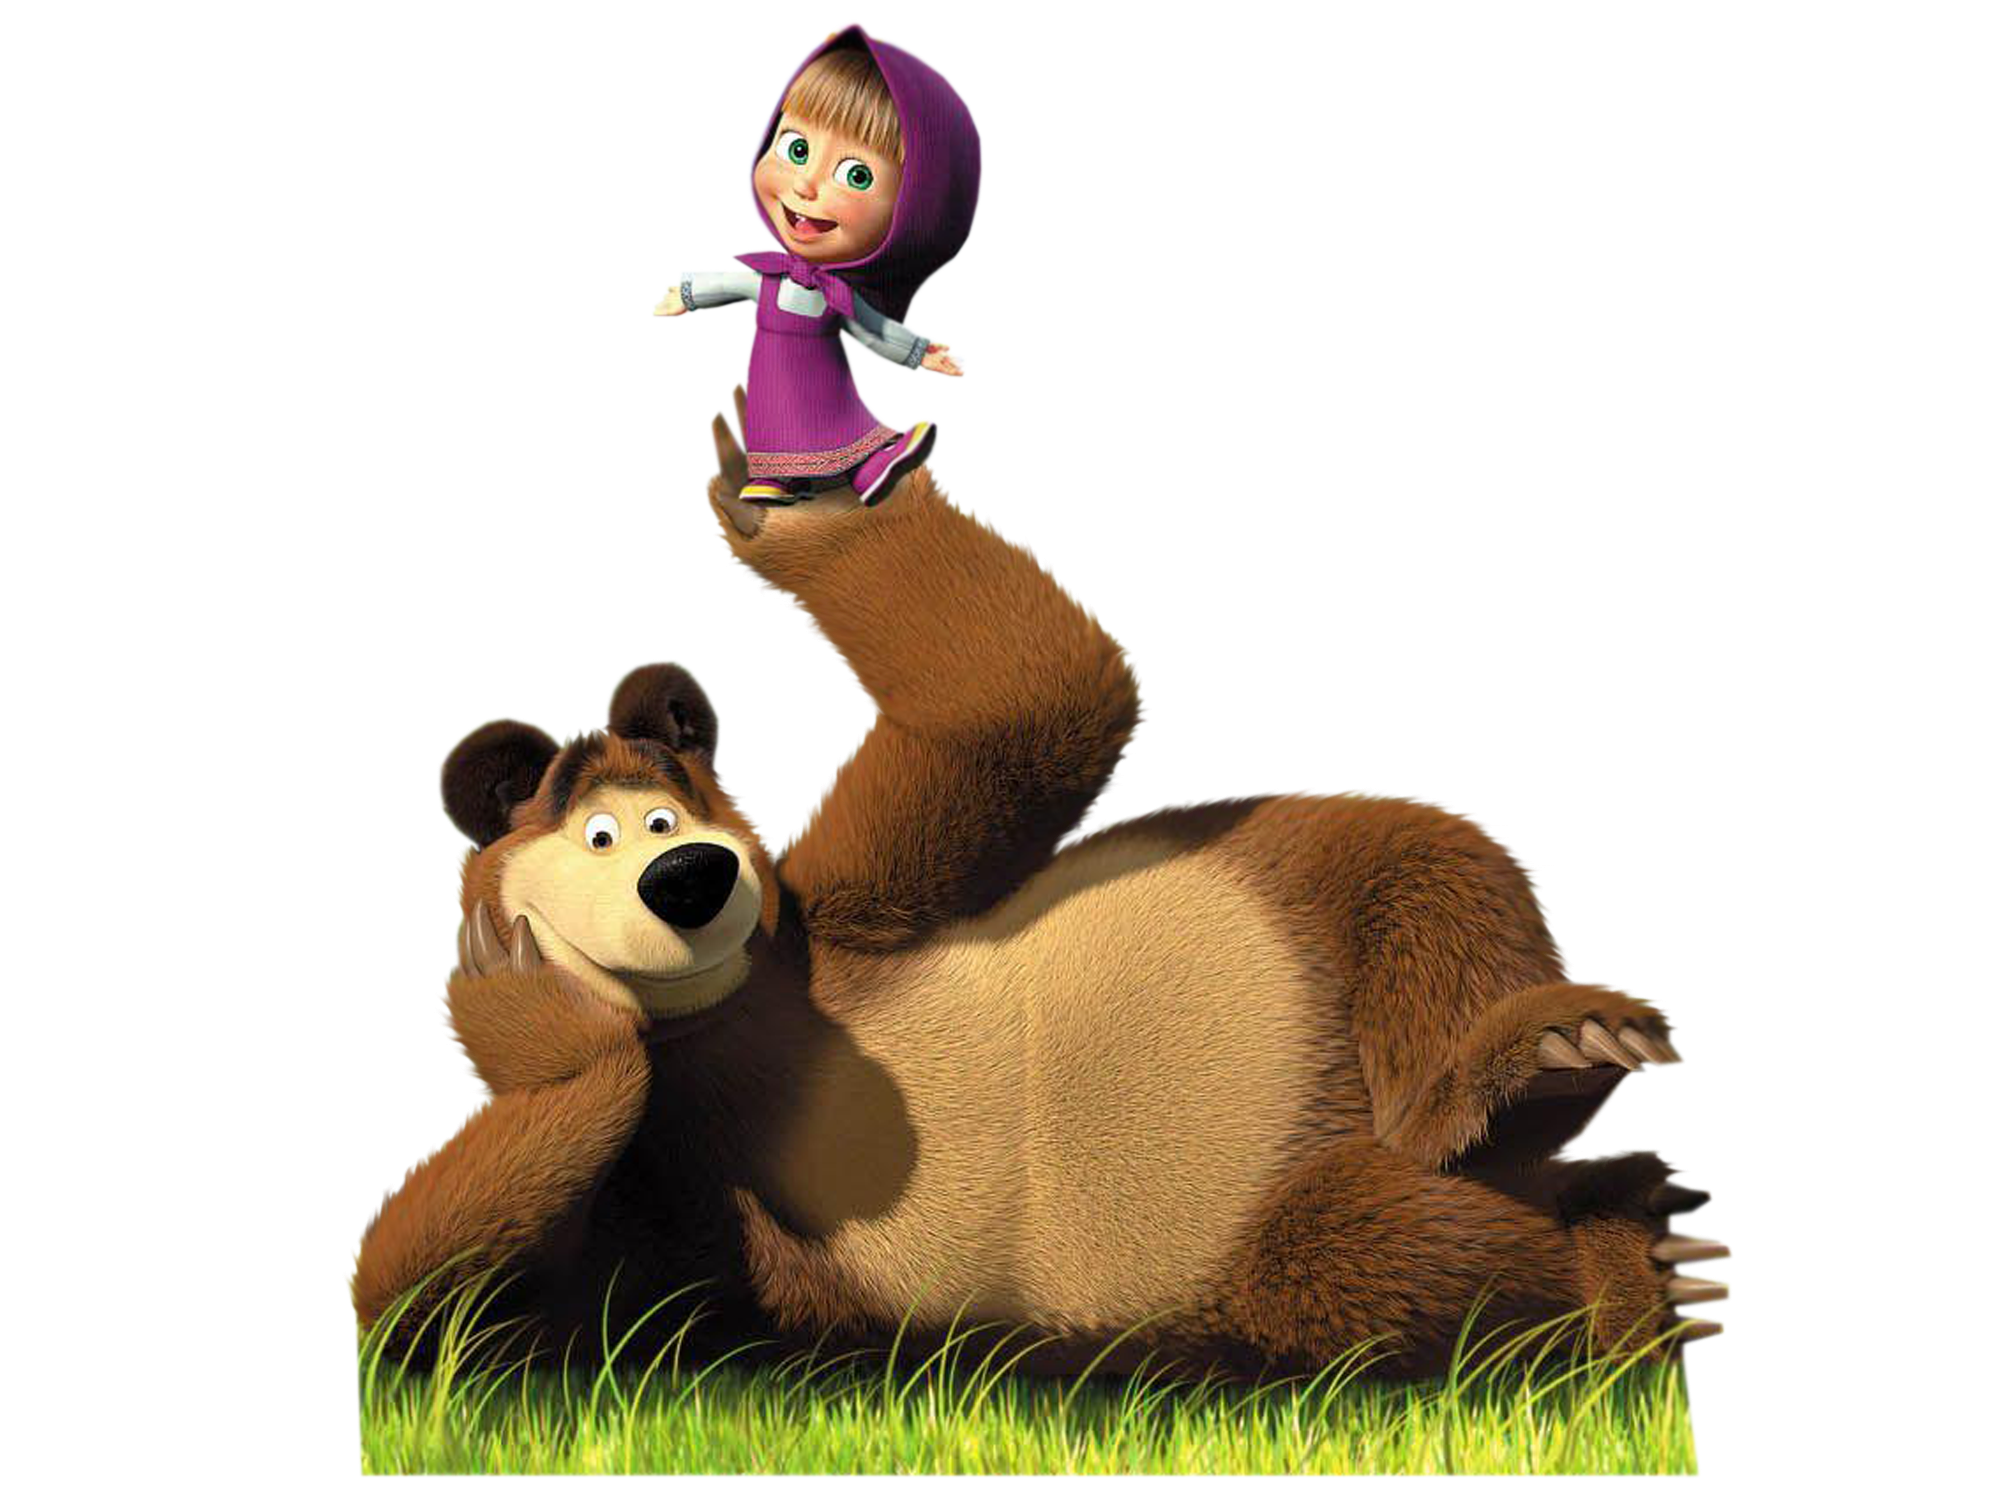 Masha el oso. Персонажи мультфильма Маша и медведь на белом фоне. Маша и медведь на белом фоне. Медведь из Маши и медведя.